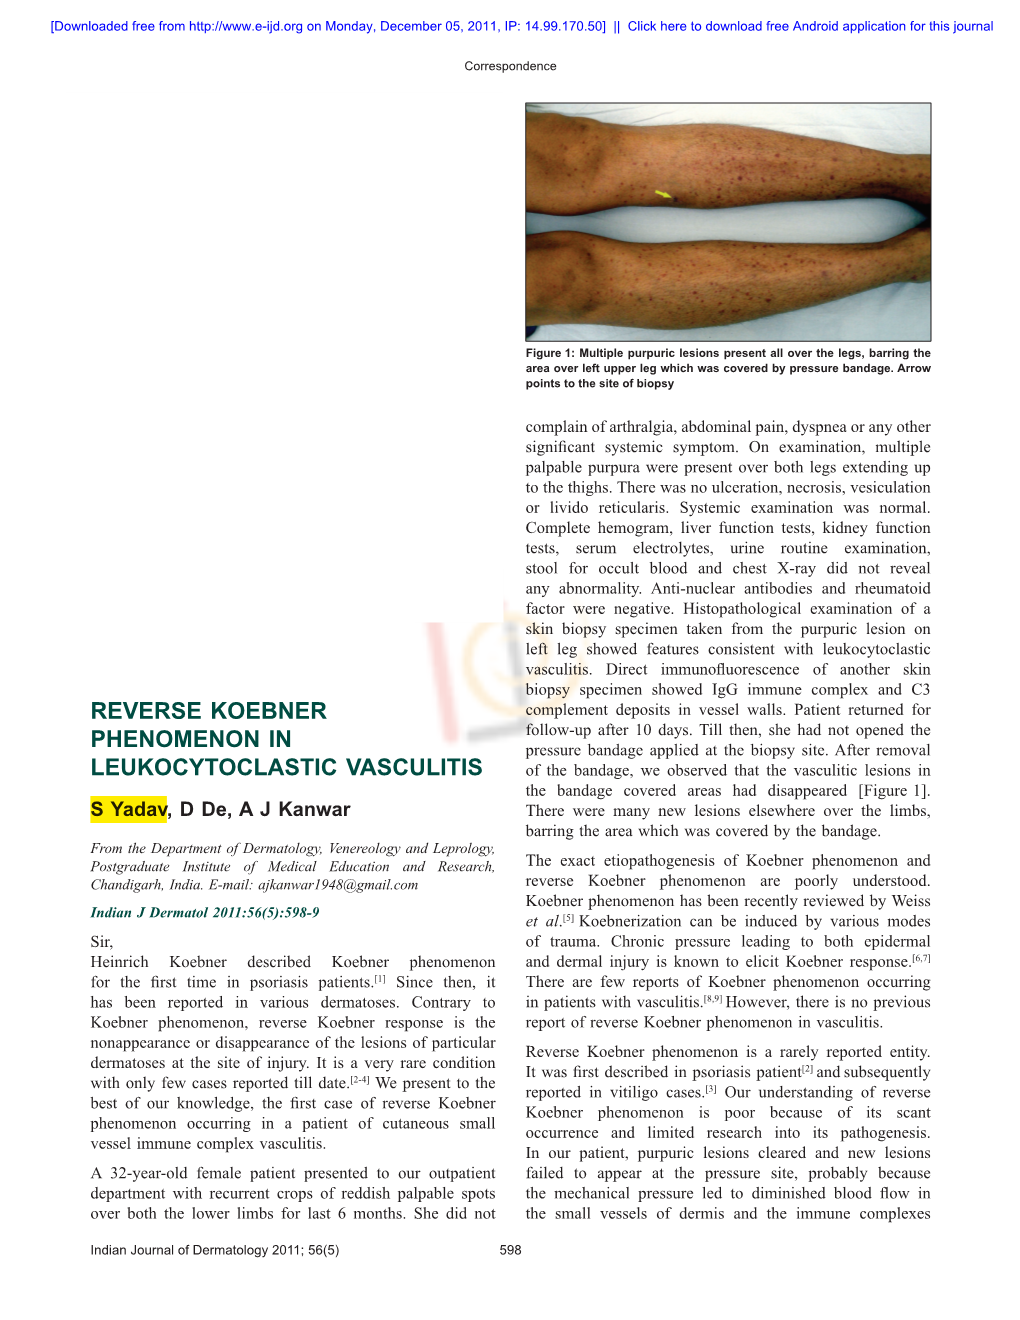 Reverse Koebner Phenomenon in Vasculitis